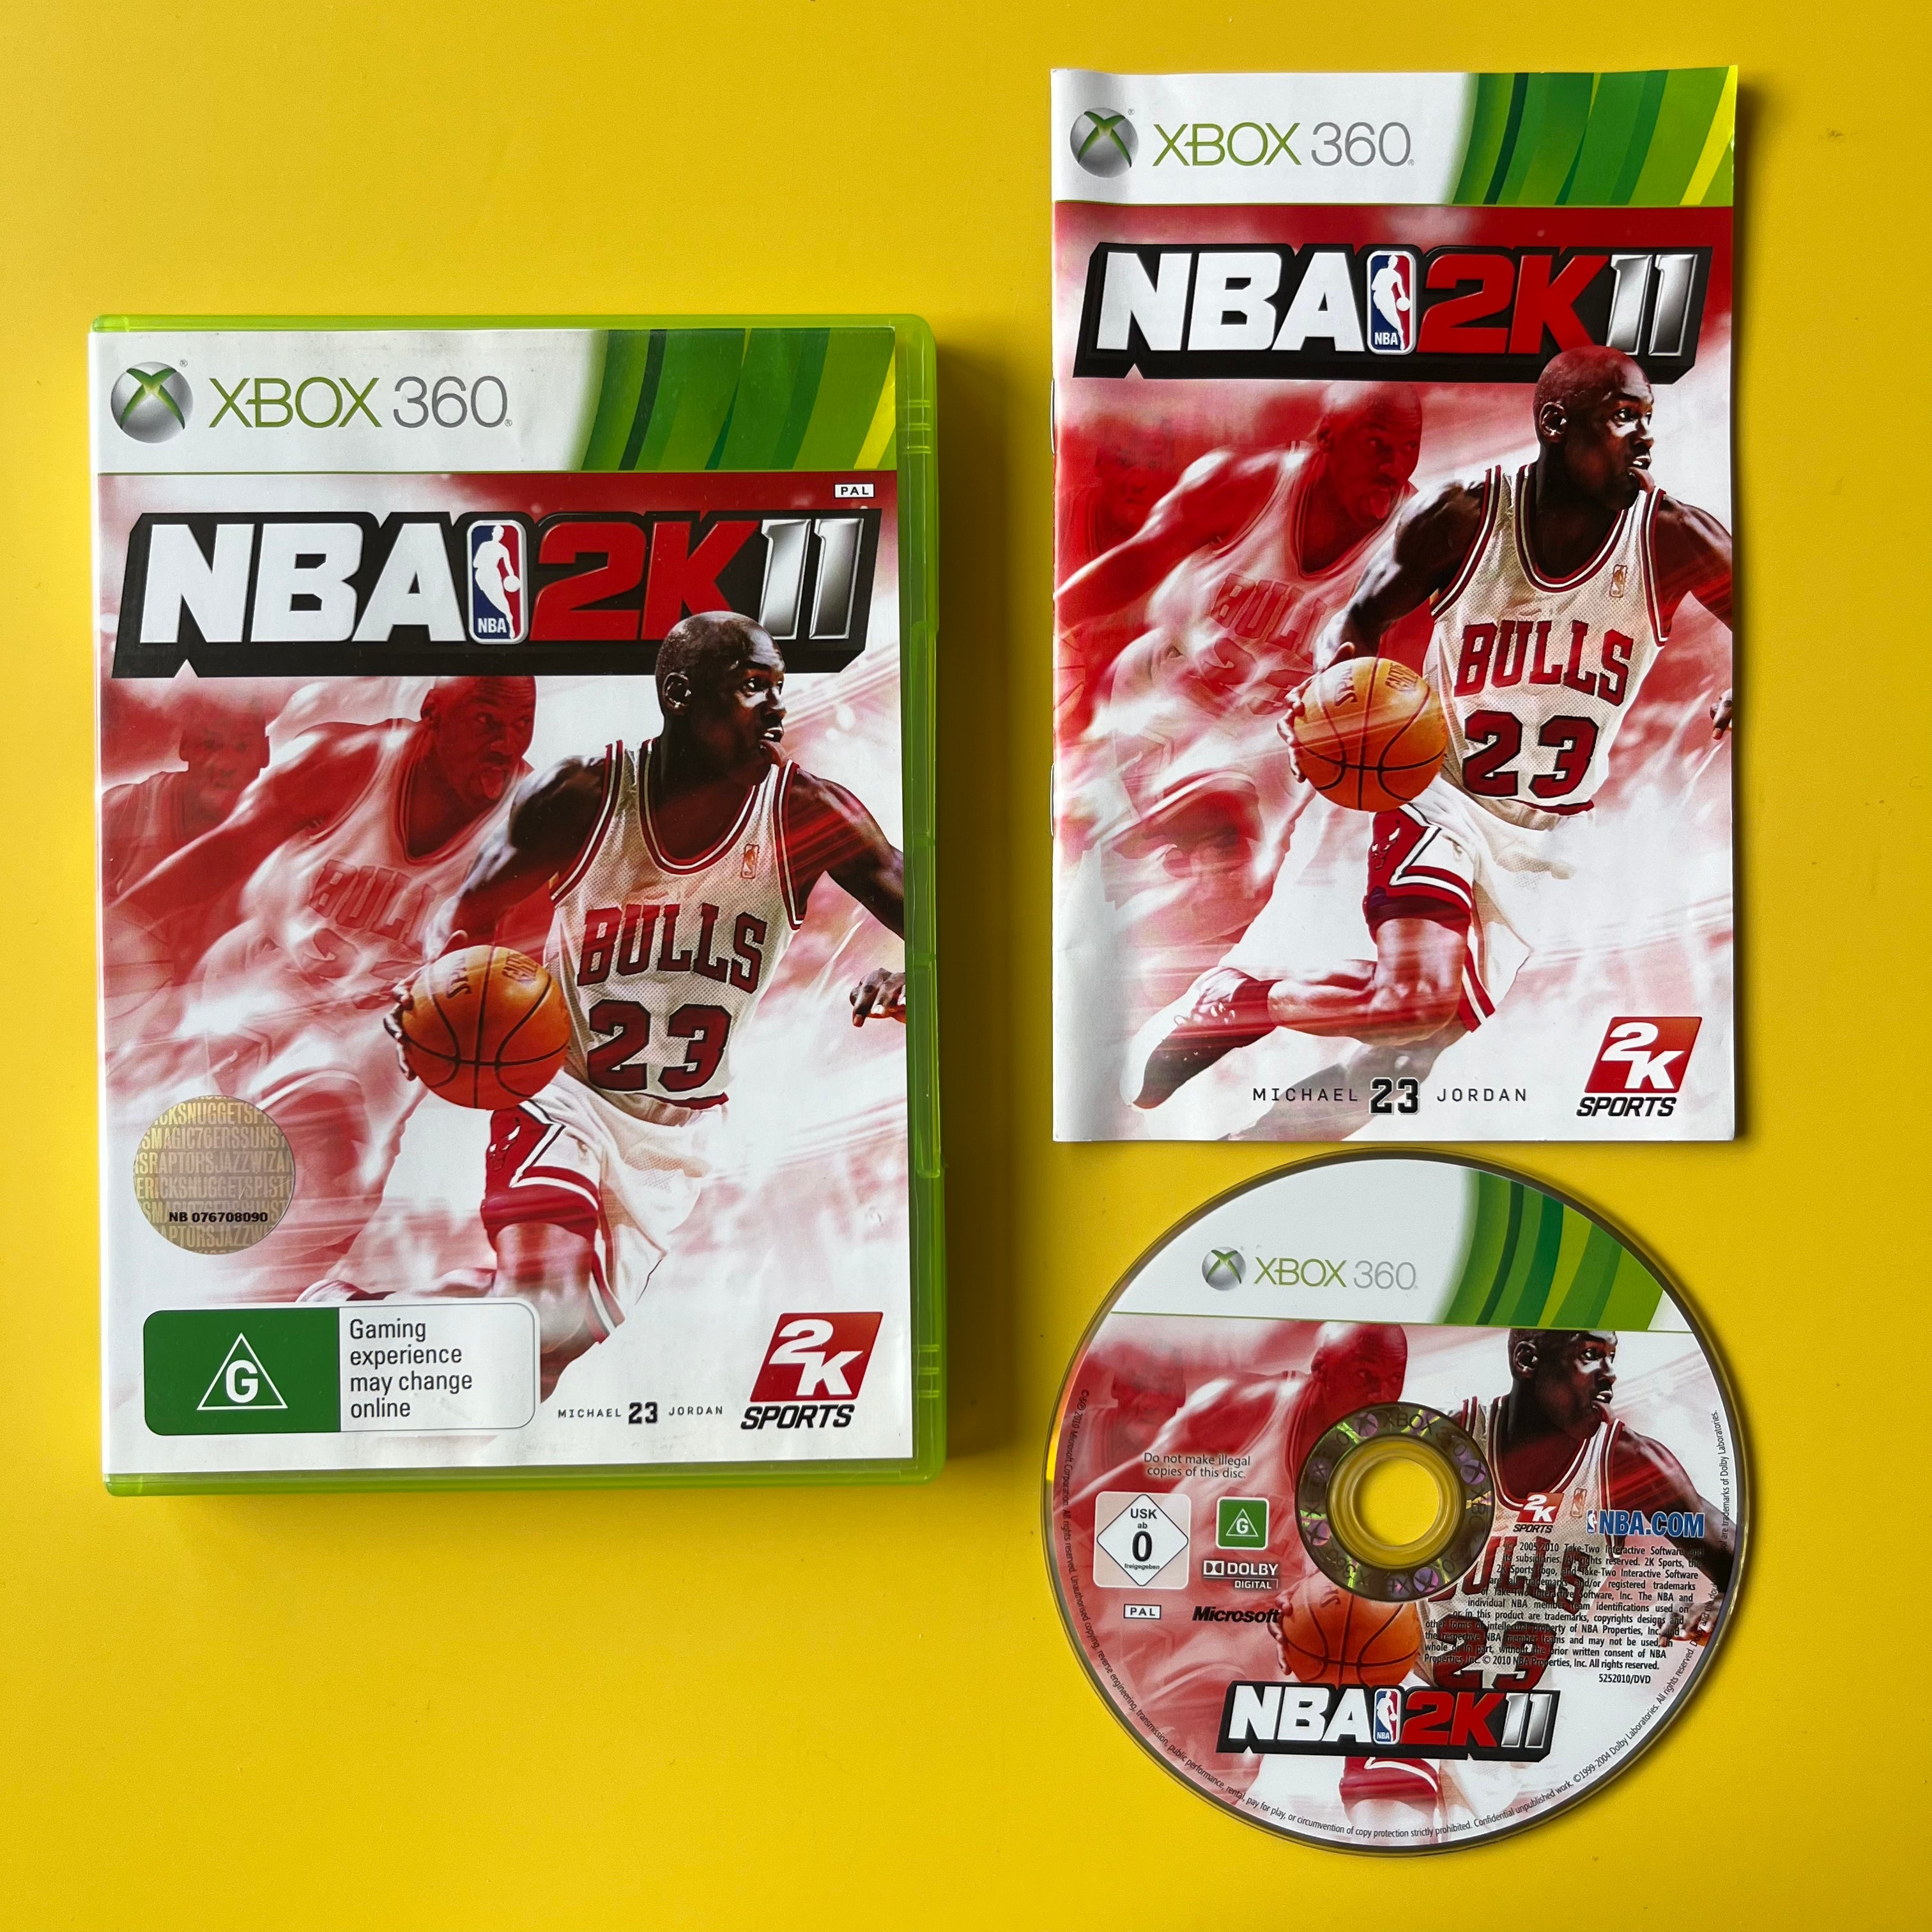 Xbox 360 - NBA 2k11